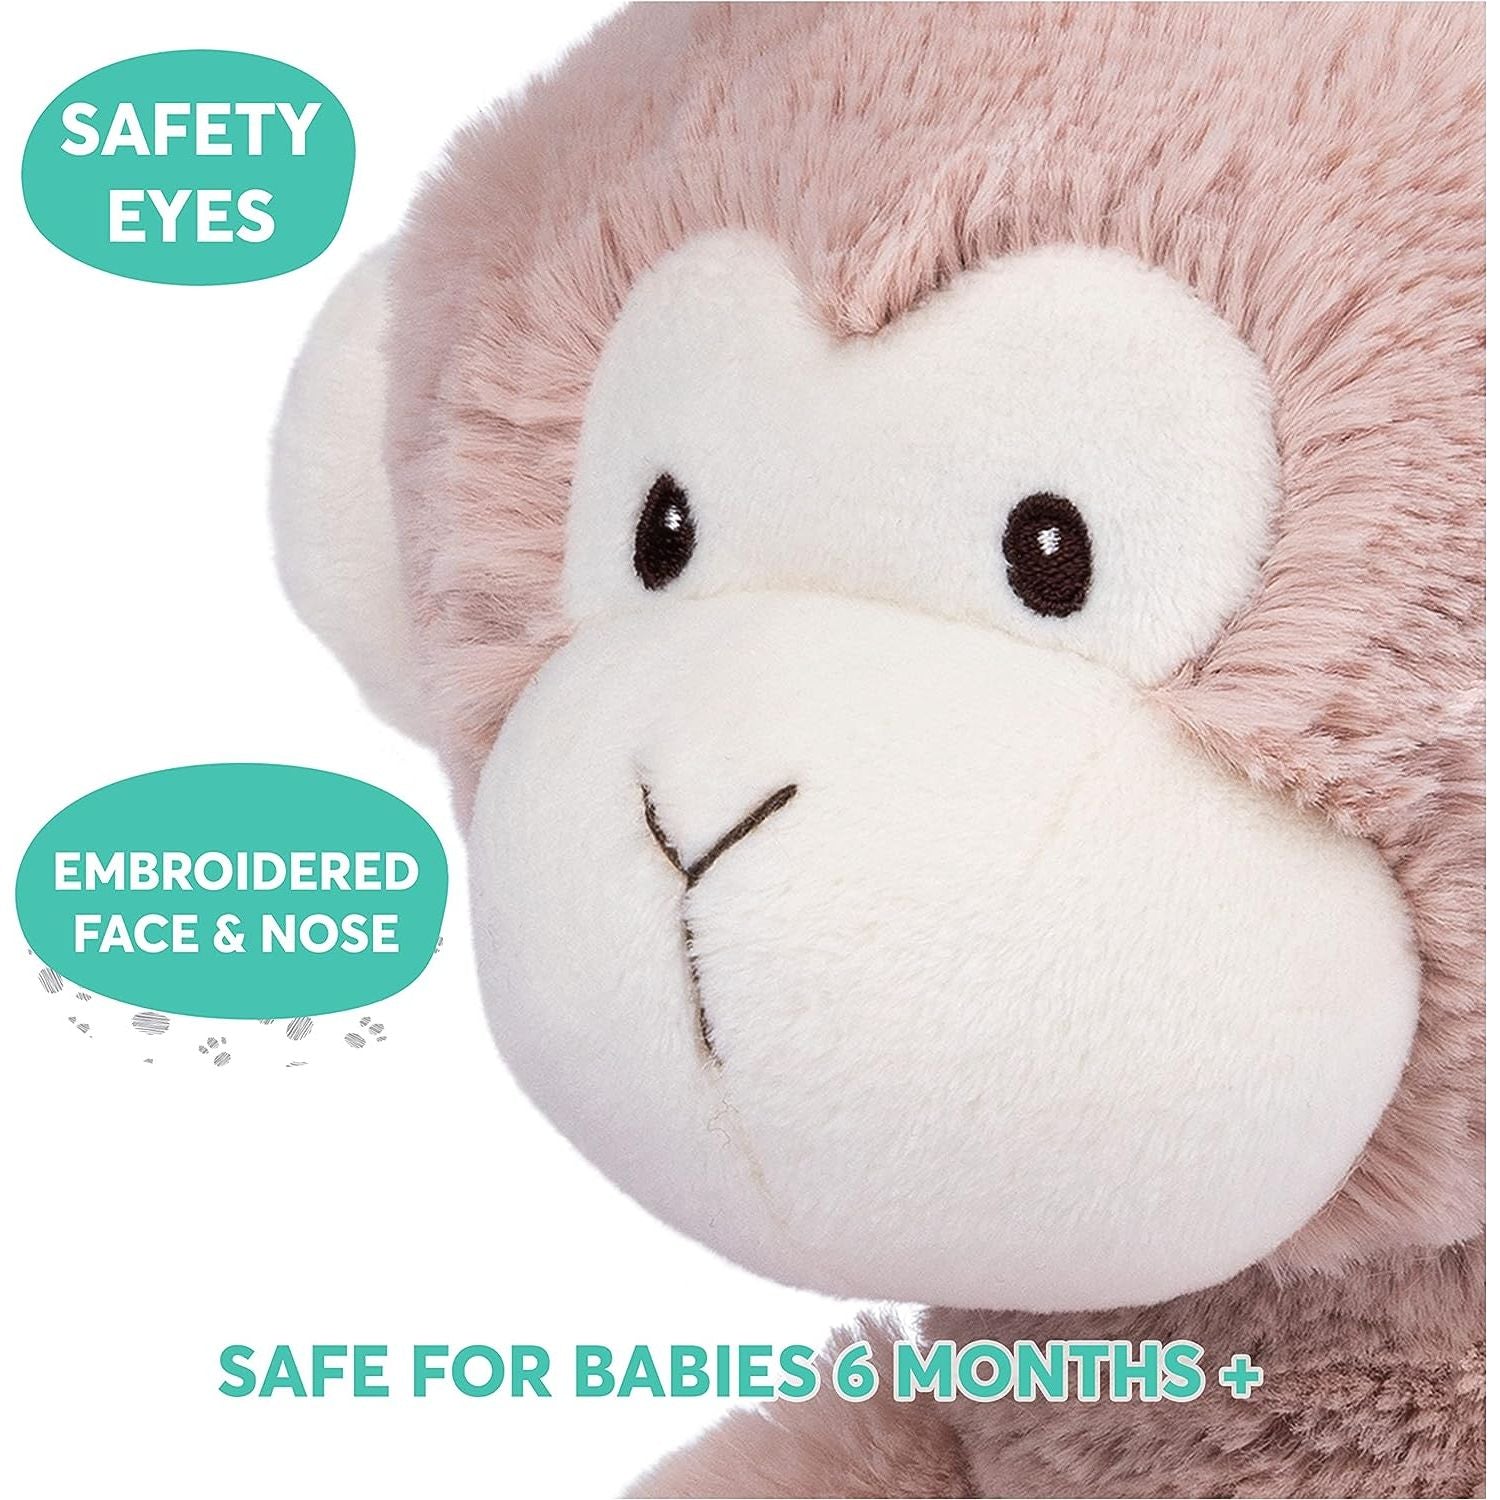 Baby GUND Lil’ Luvs Collection, Micah Monkey Premium Plush Stuffed Animal  - Heretoserveyou